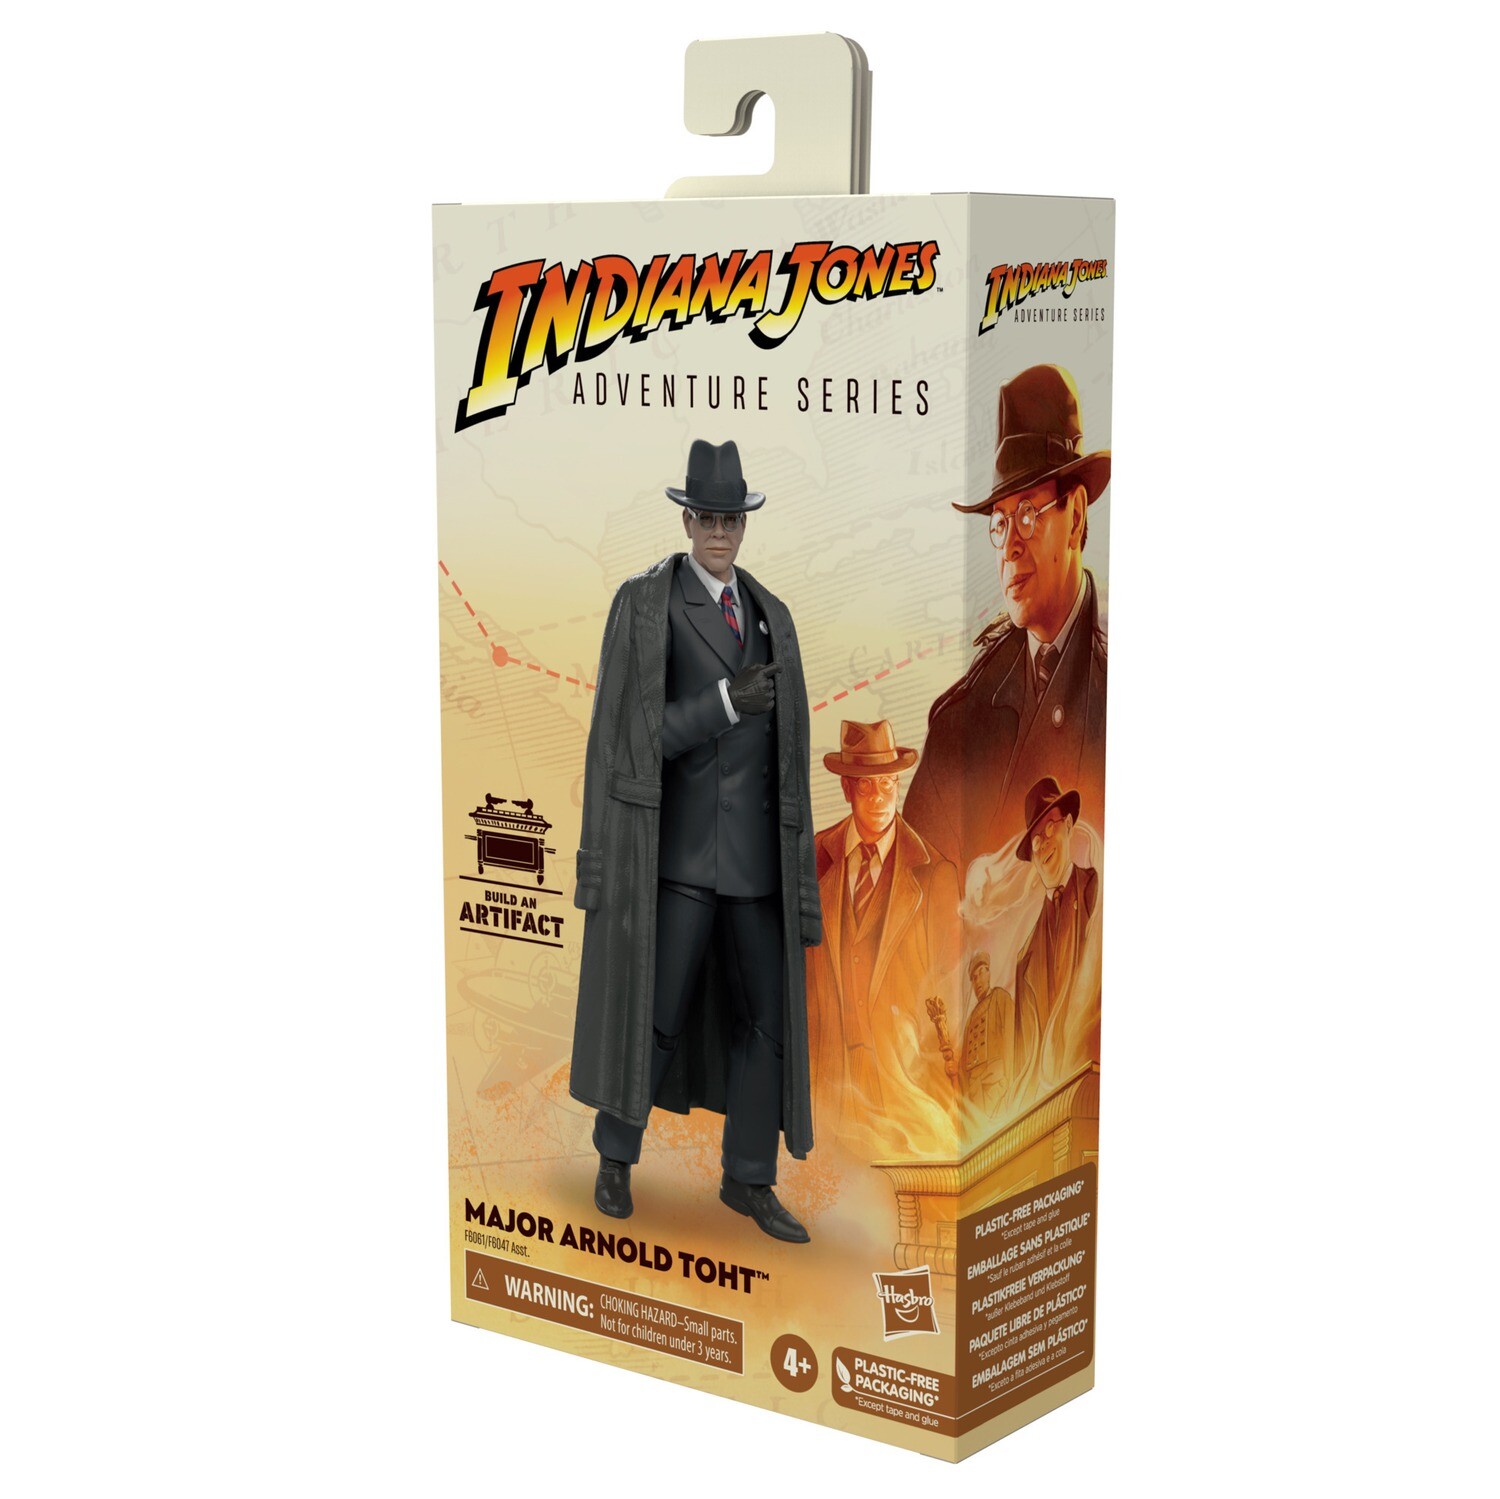 Pre-order Indiana Jones Adventure Series (Raiders of the Lost Ark) Toht 15 cm action figure